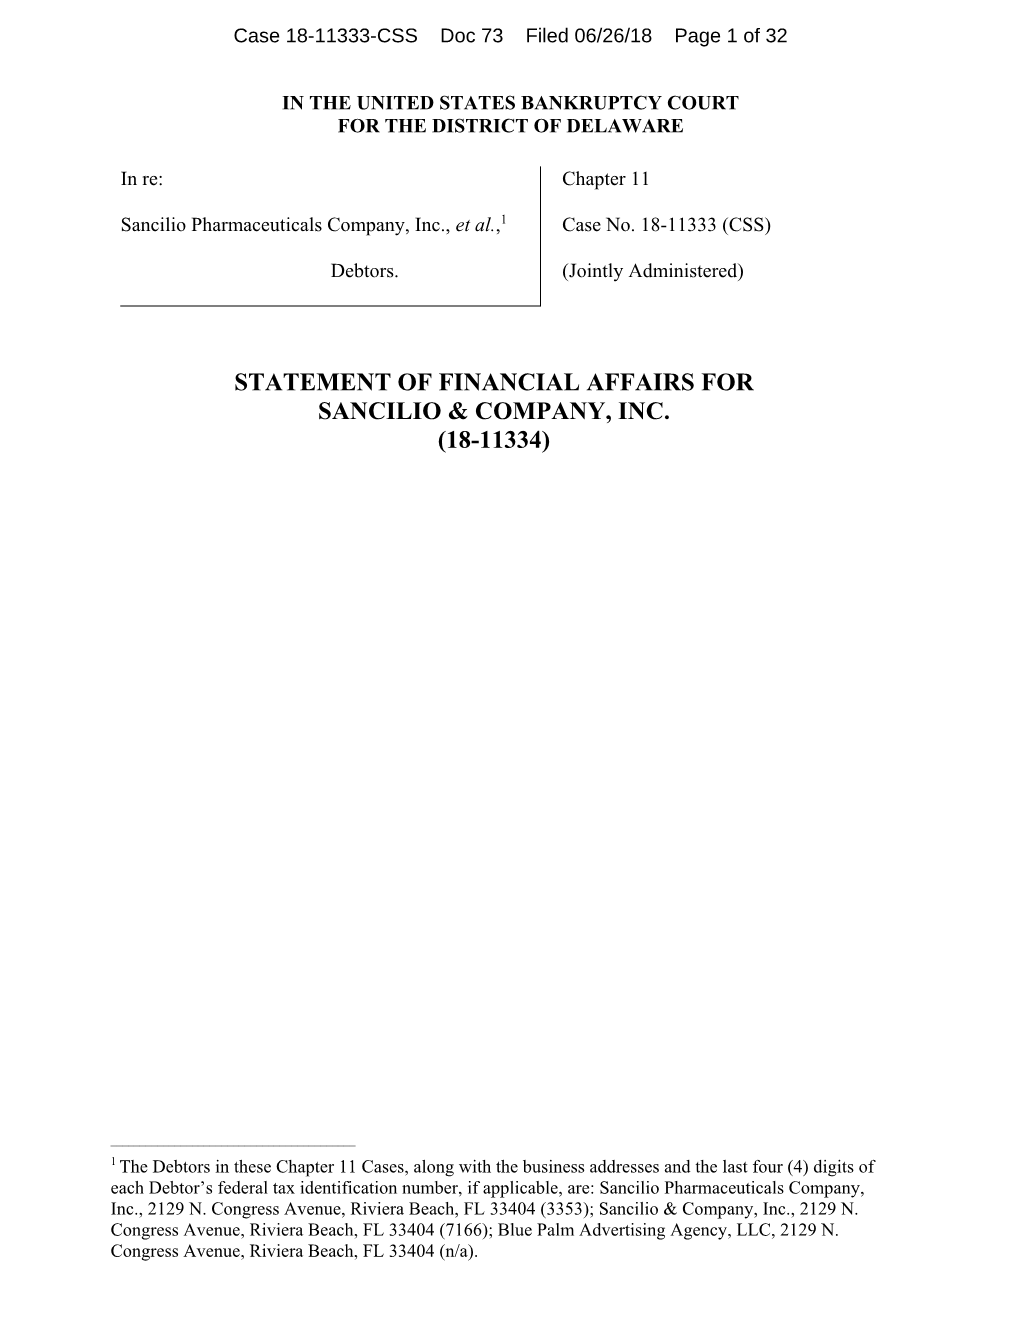 Statement of Financial Affairs for Sancilio & Company, Inc